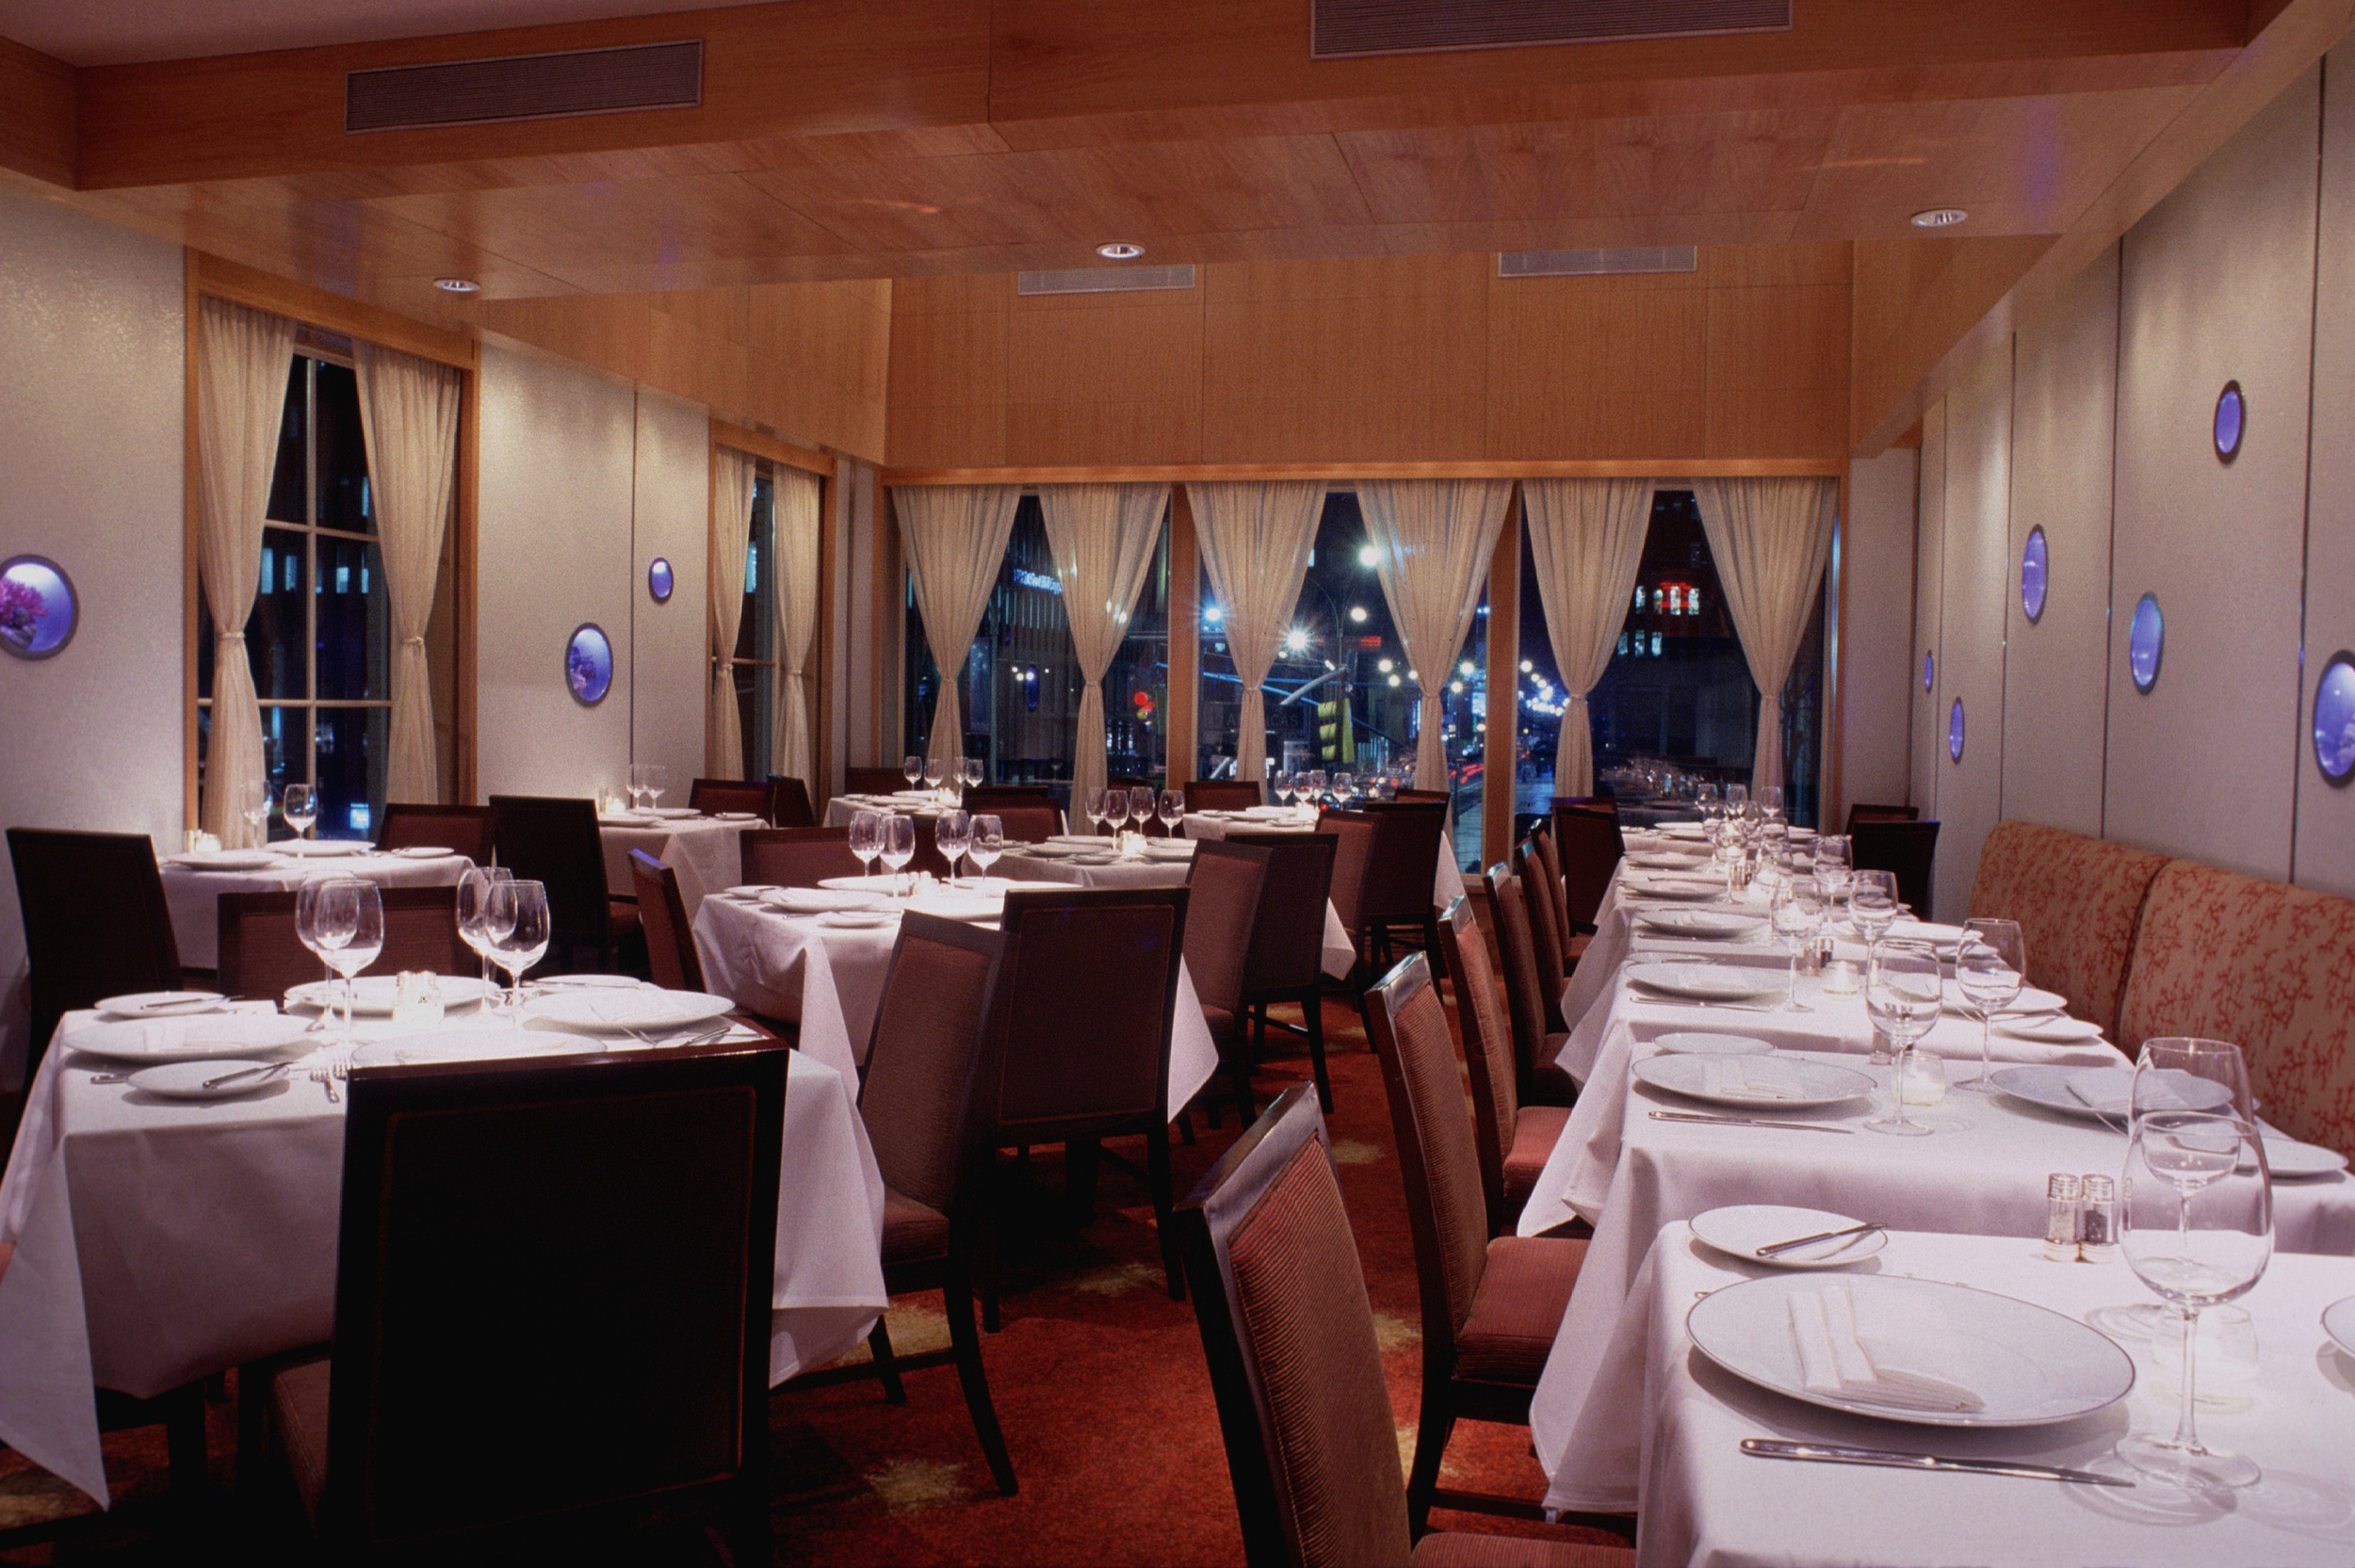  Citarella Restaurant, New York, Rockwell Group 